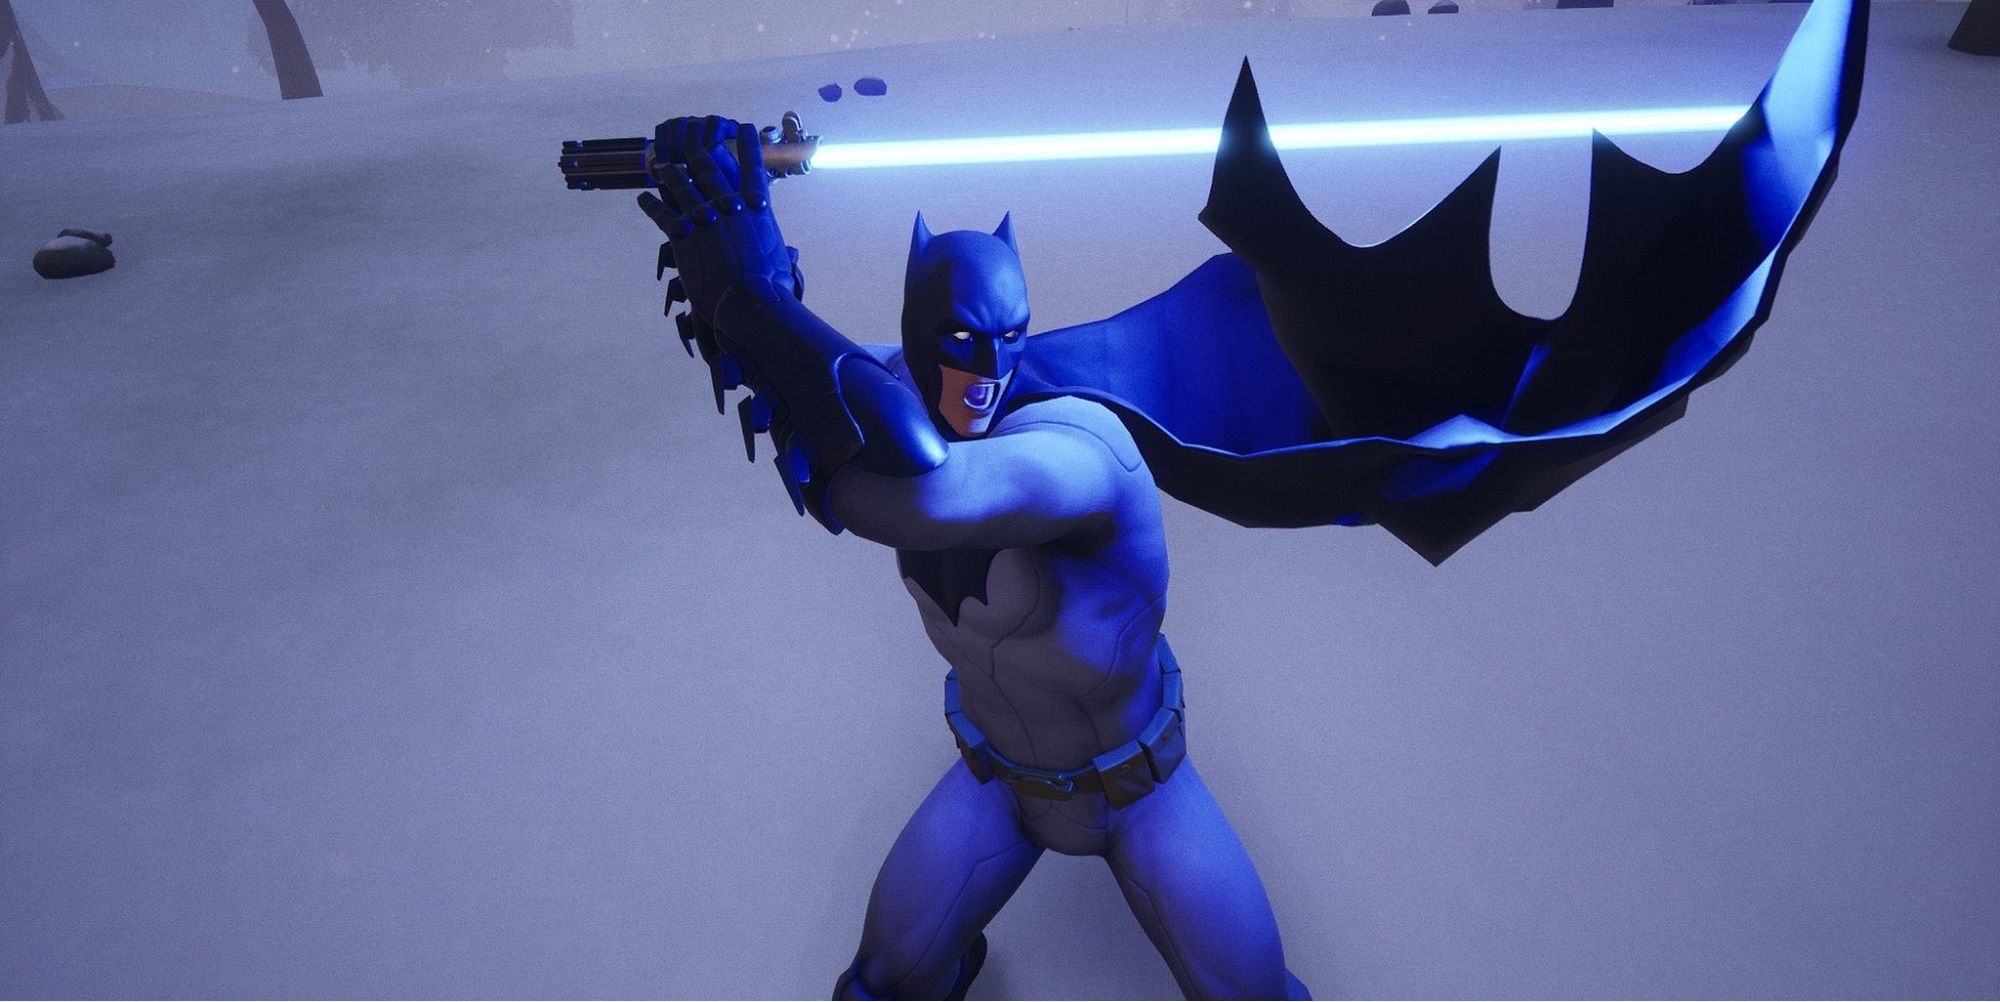 Fortnite Batman